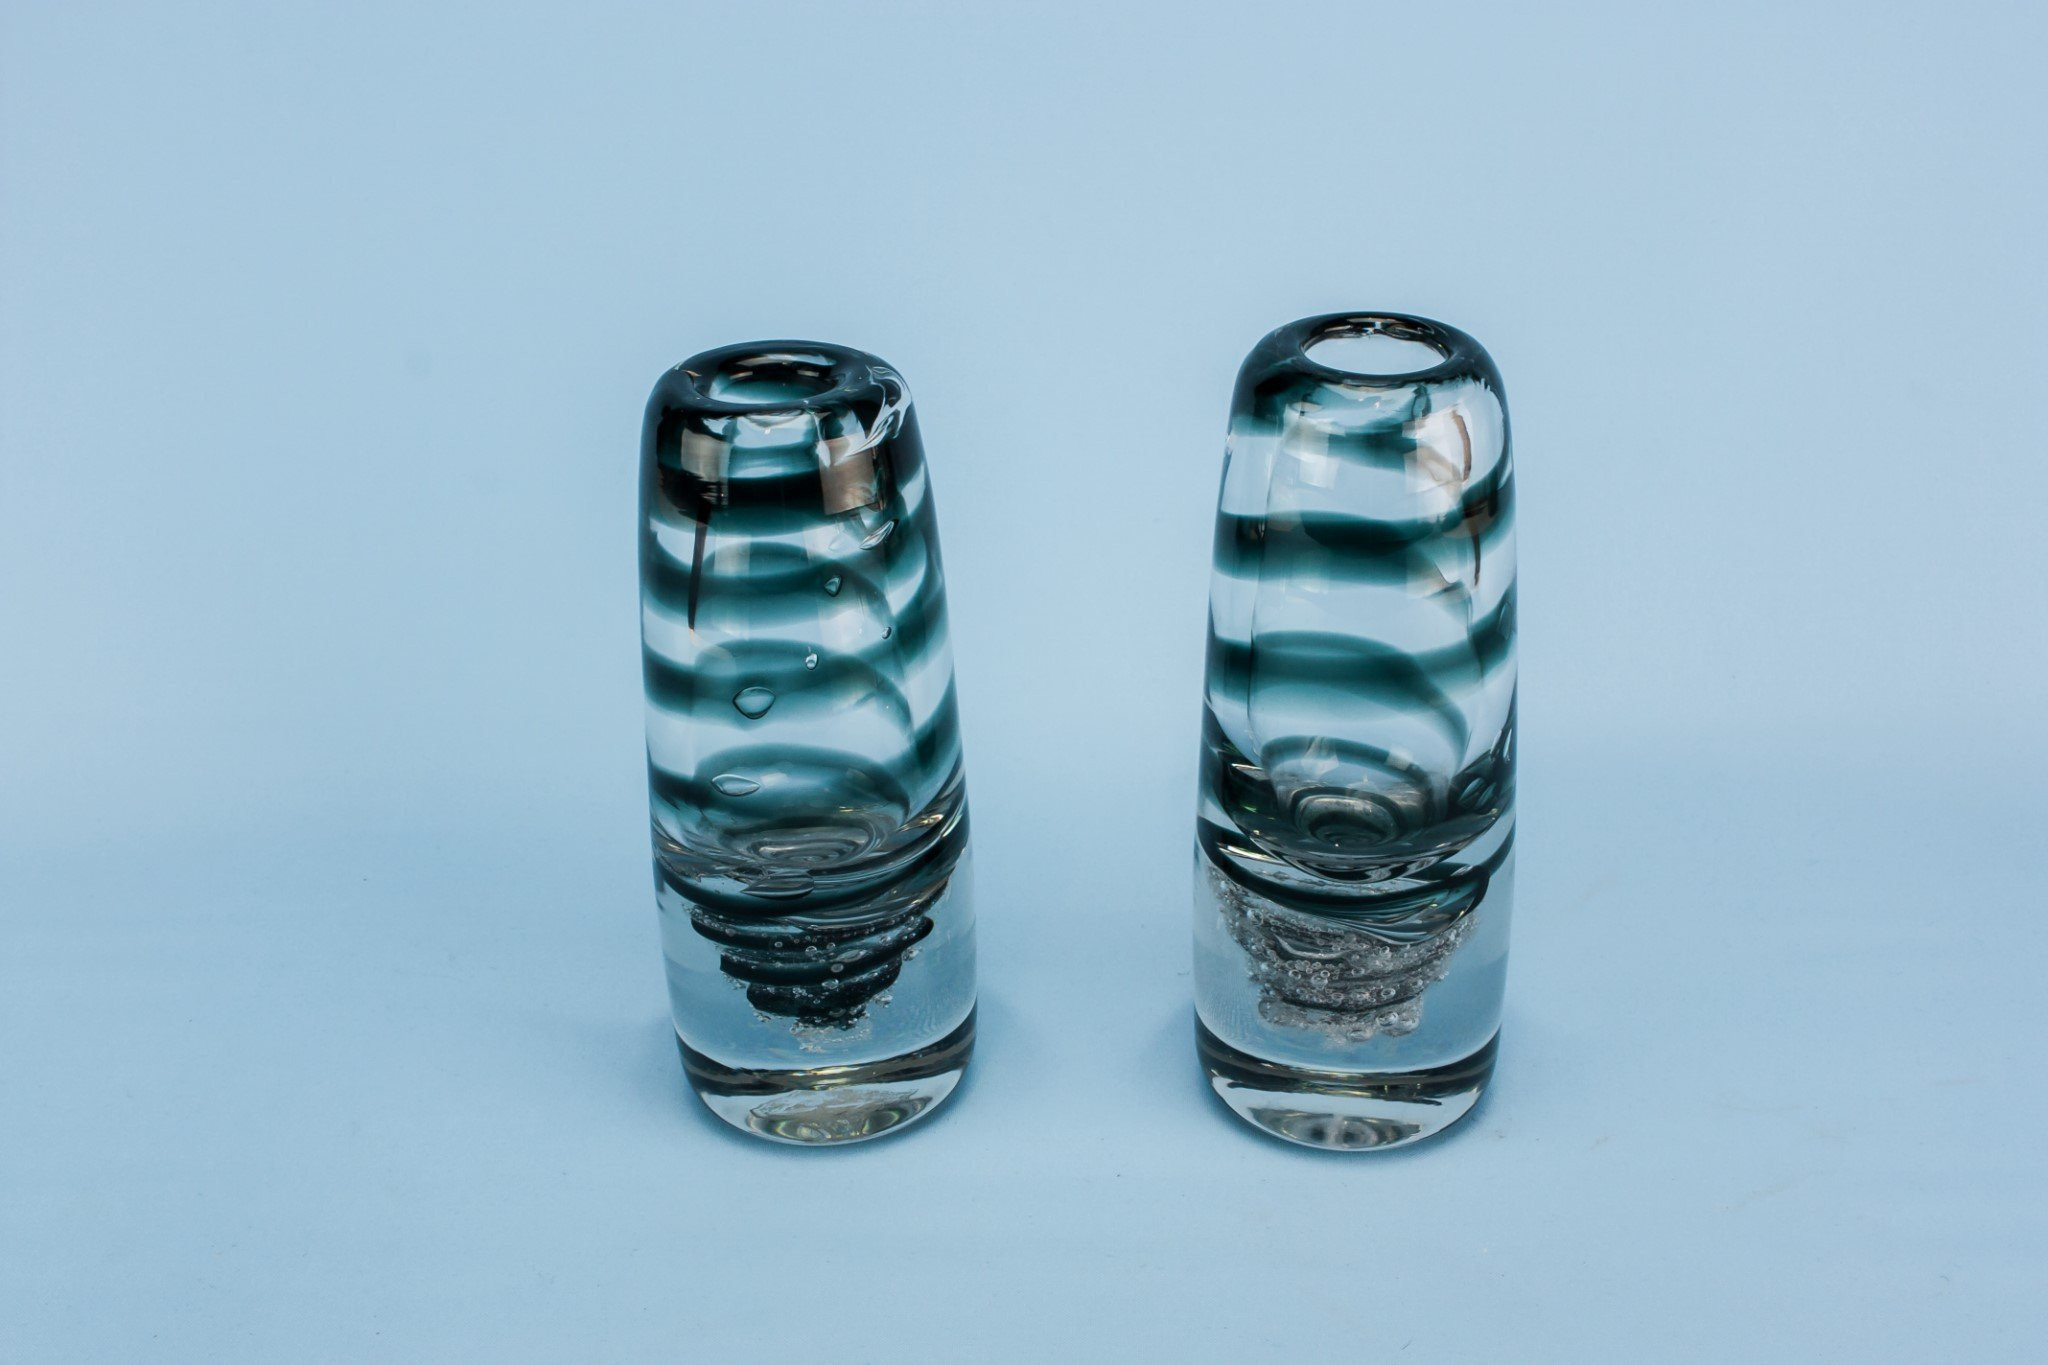 20 Stylish Round Clear Glass Vase 2024 free download round clear glass vase of 17 fresh antique blue glass vases bogekompresorturkiye com throughout 2 glass vases